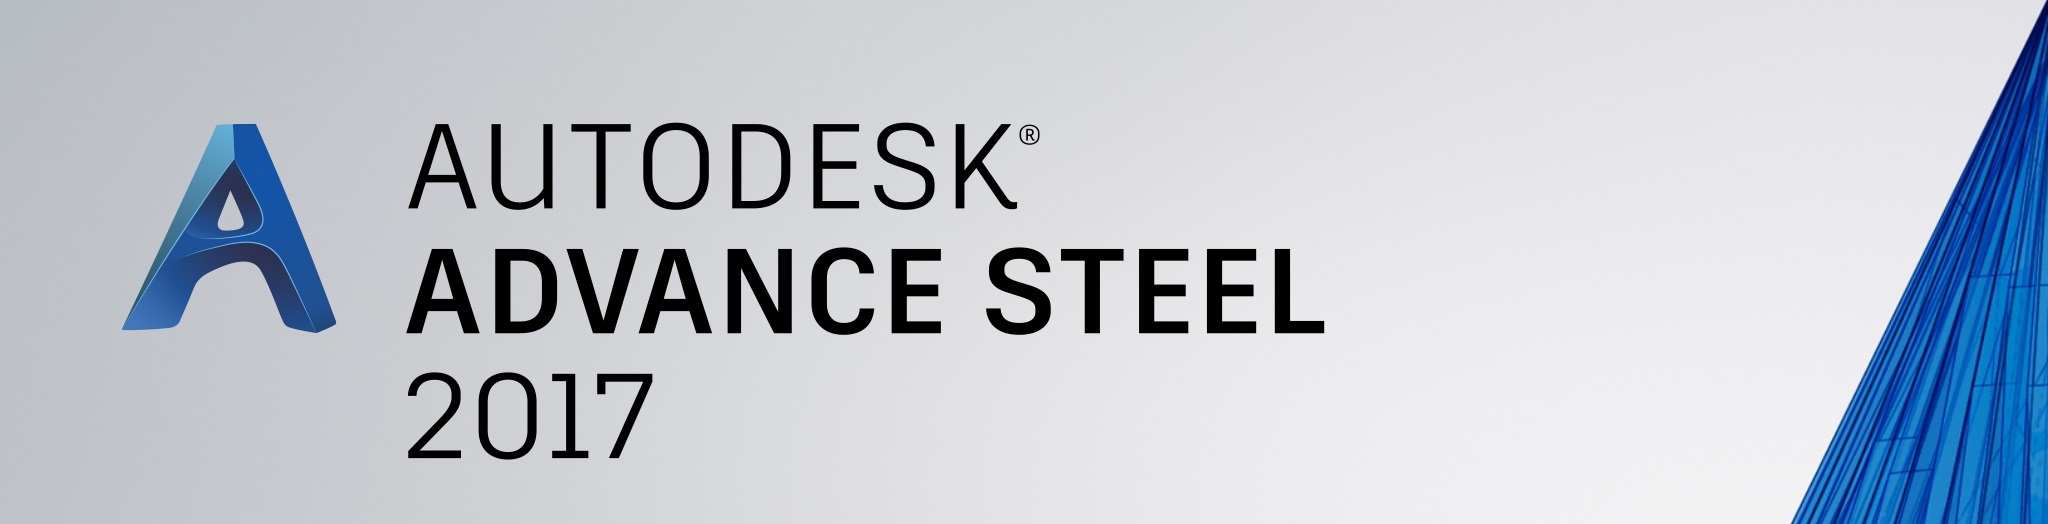 advance-steel-2017-badge-2048px.jpg